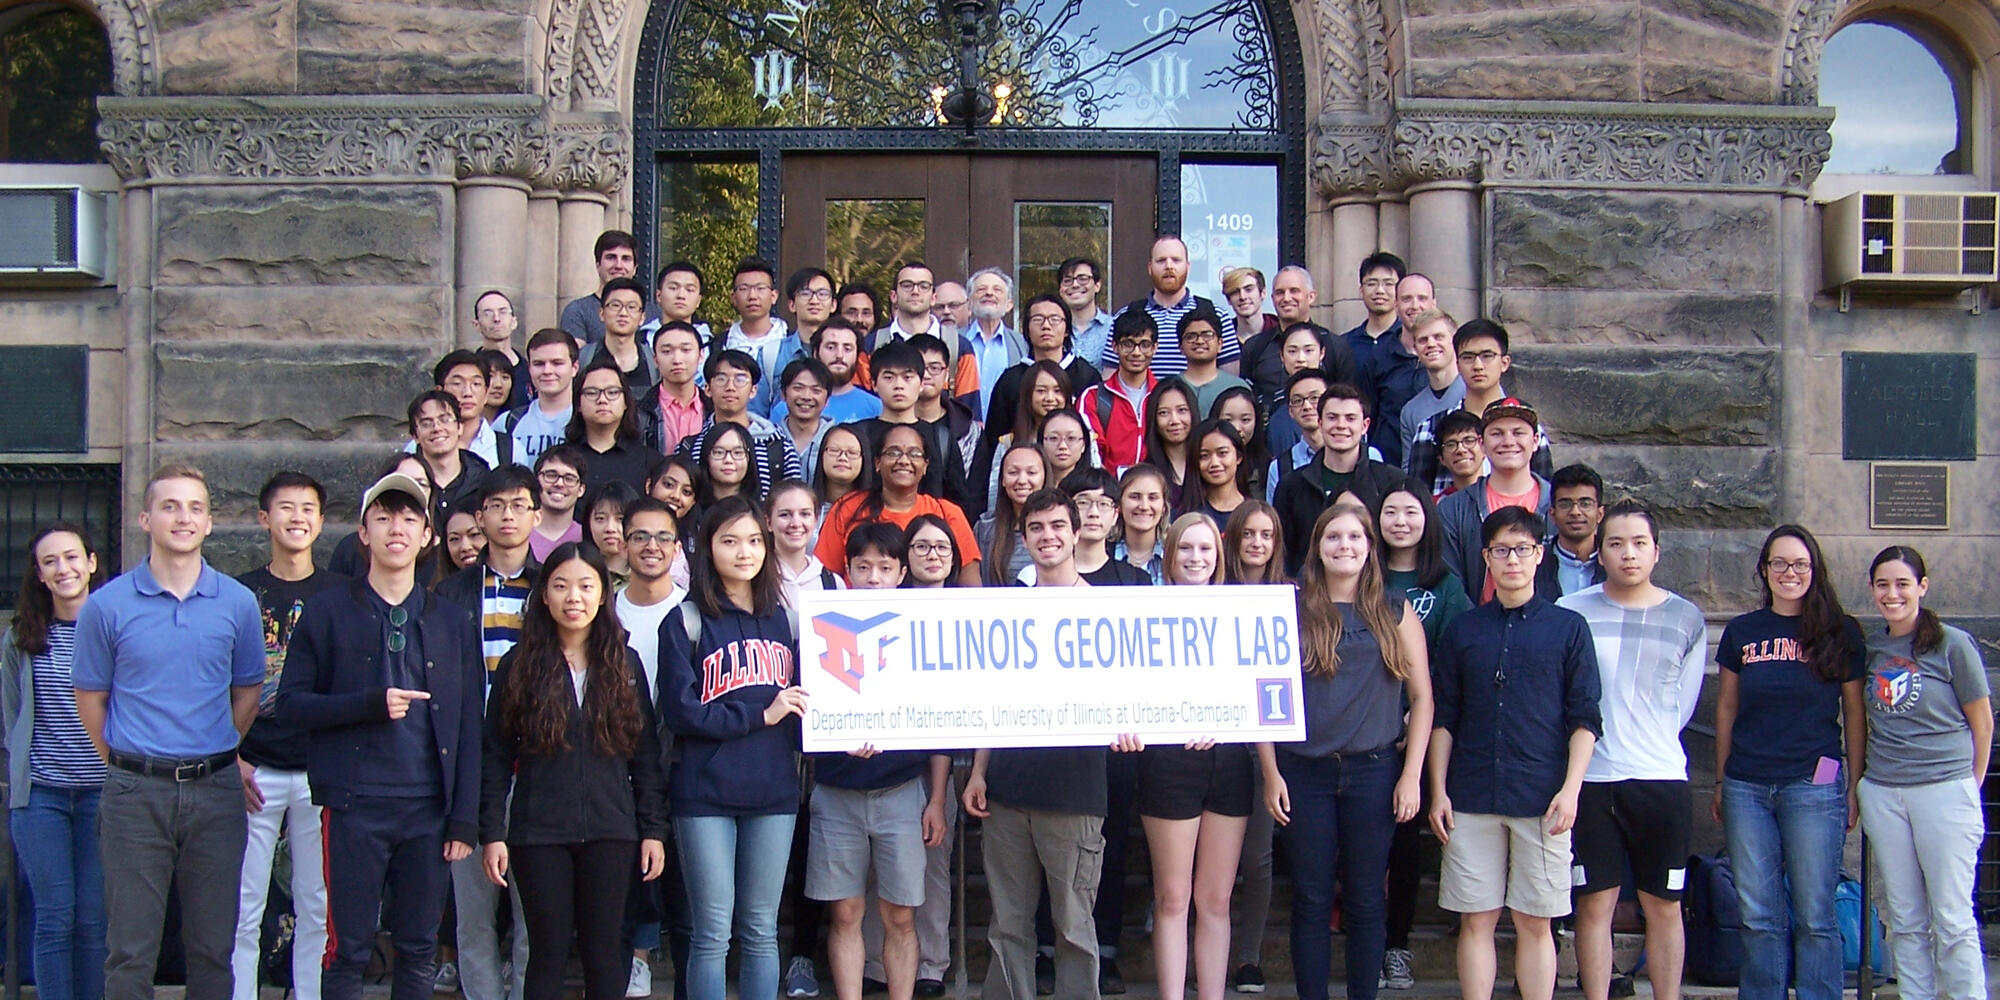 Illinois Geometry Lab members